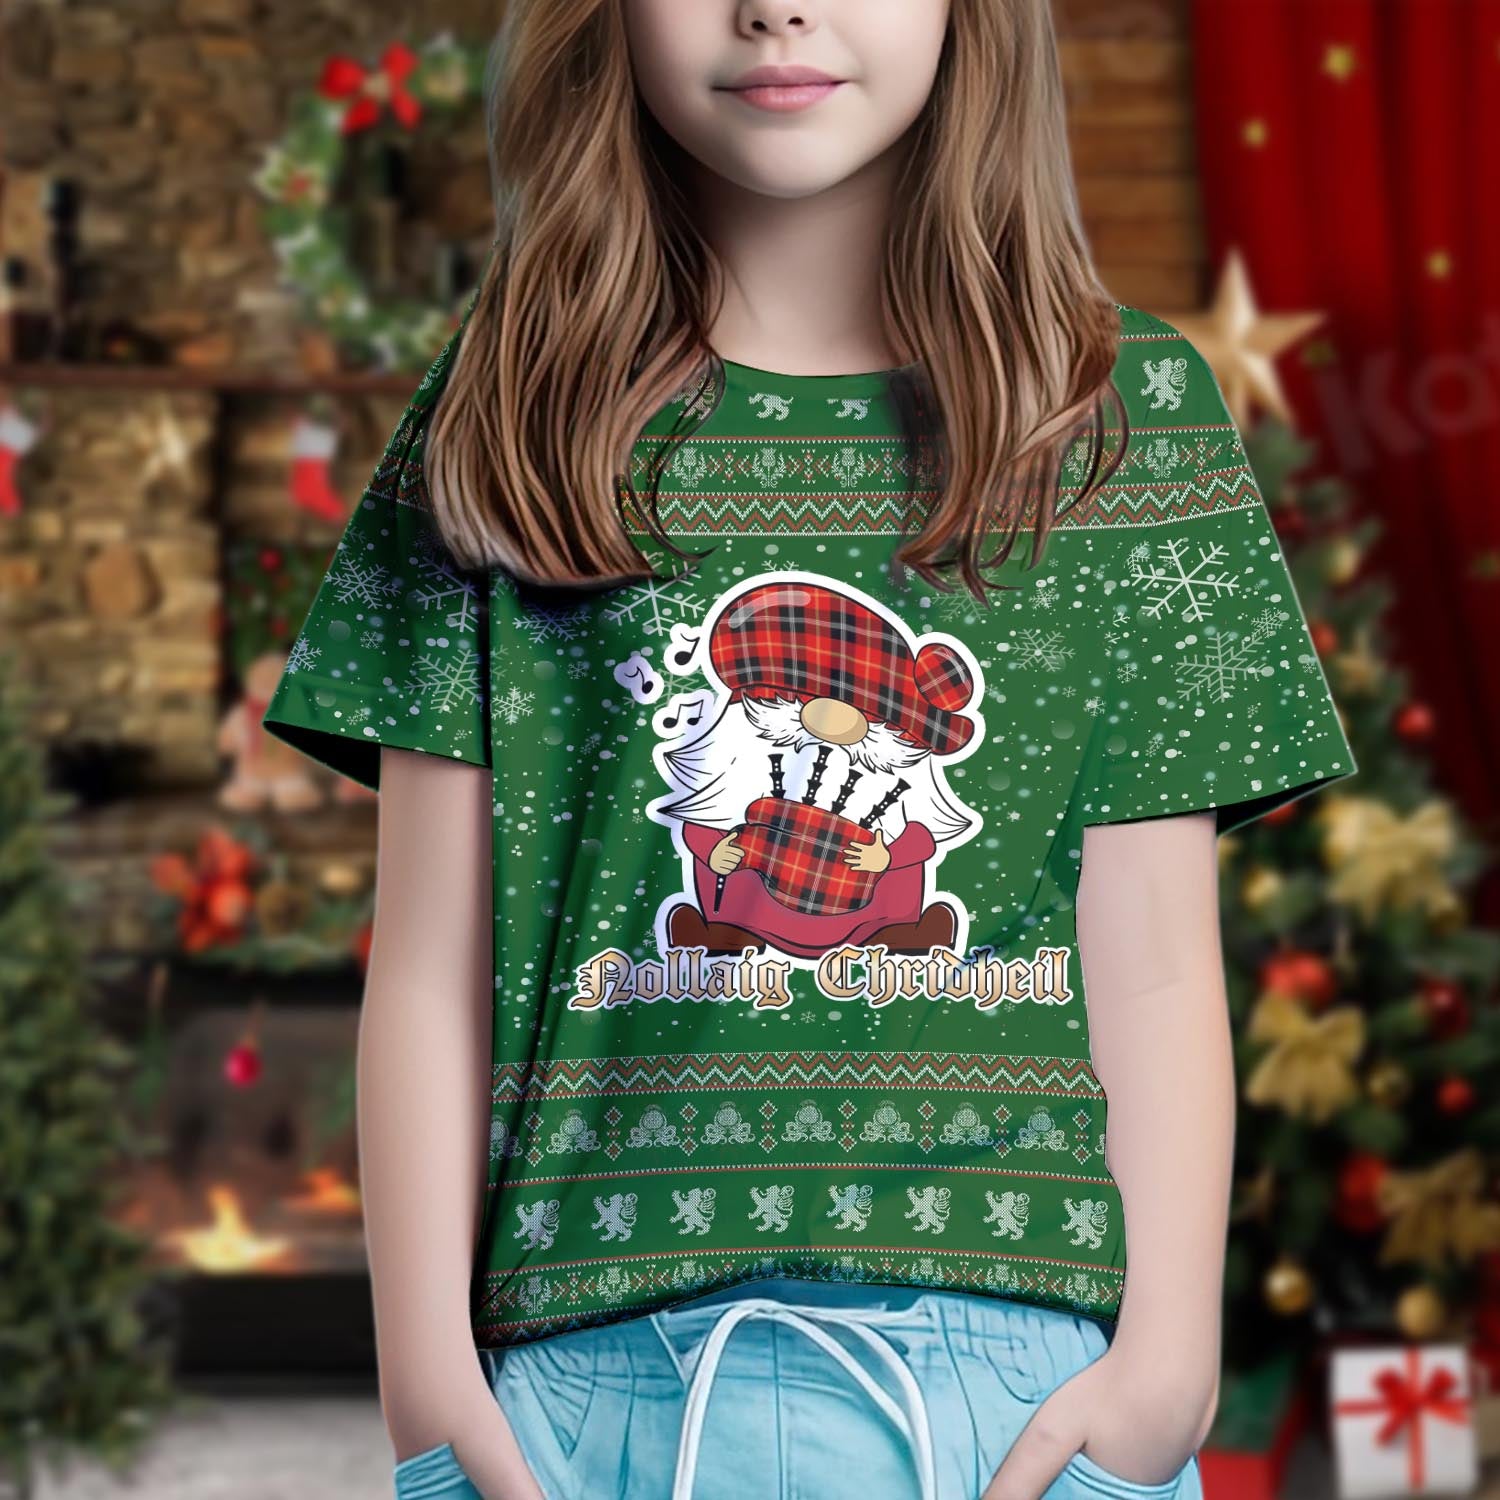 Majoribanks Clan Christmas Family T-Shirt with Funny Gnome Playing Bagpipes Kid's Shirt Green - Tartanvibesclothing